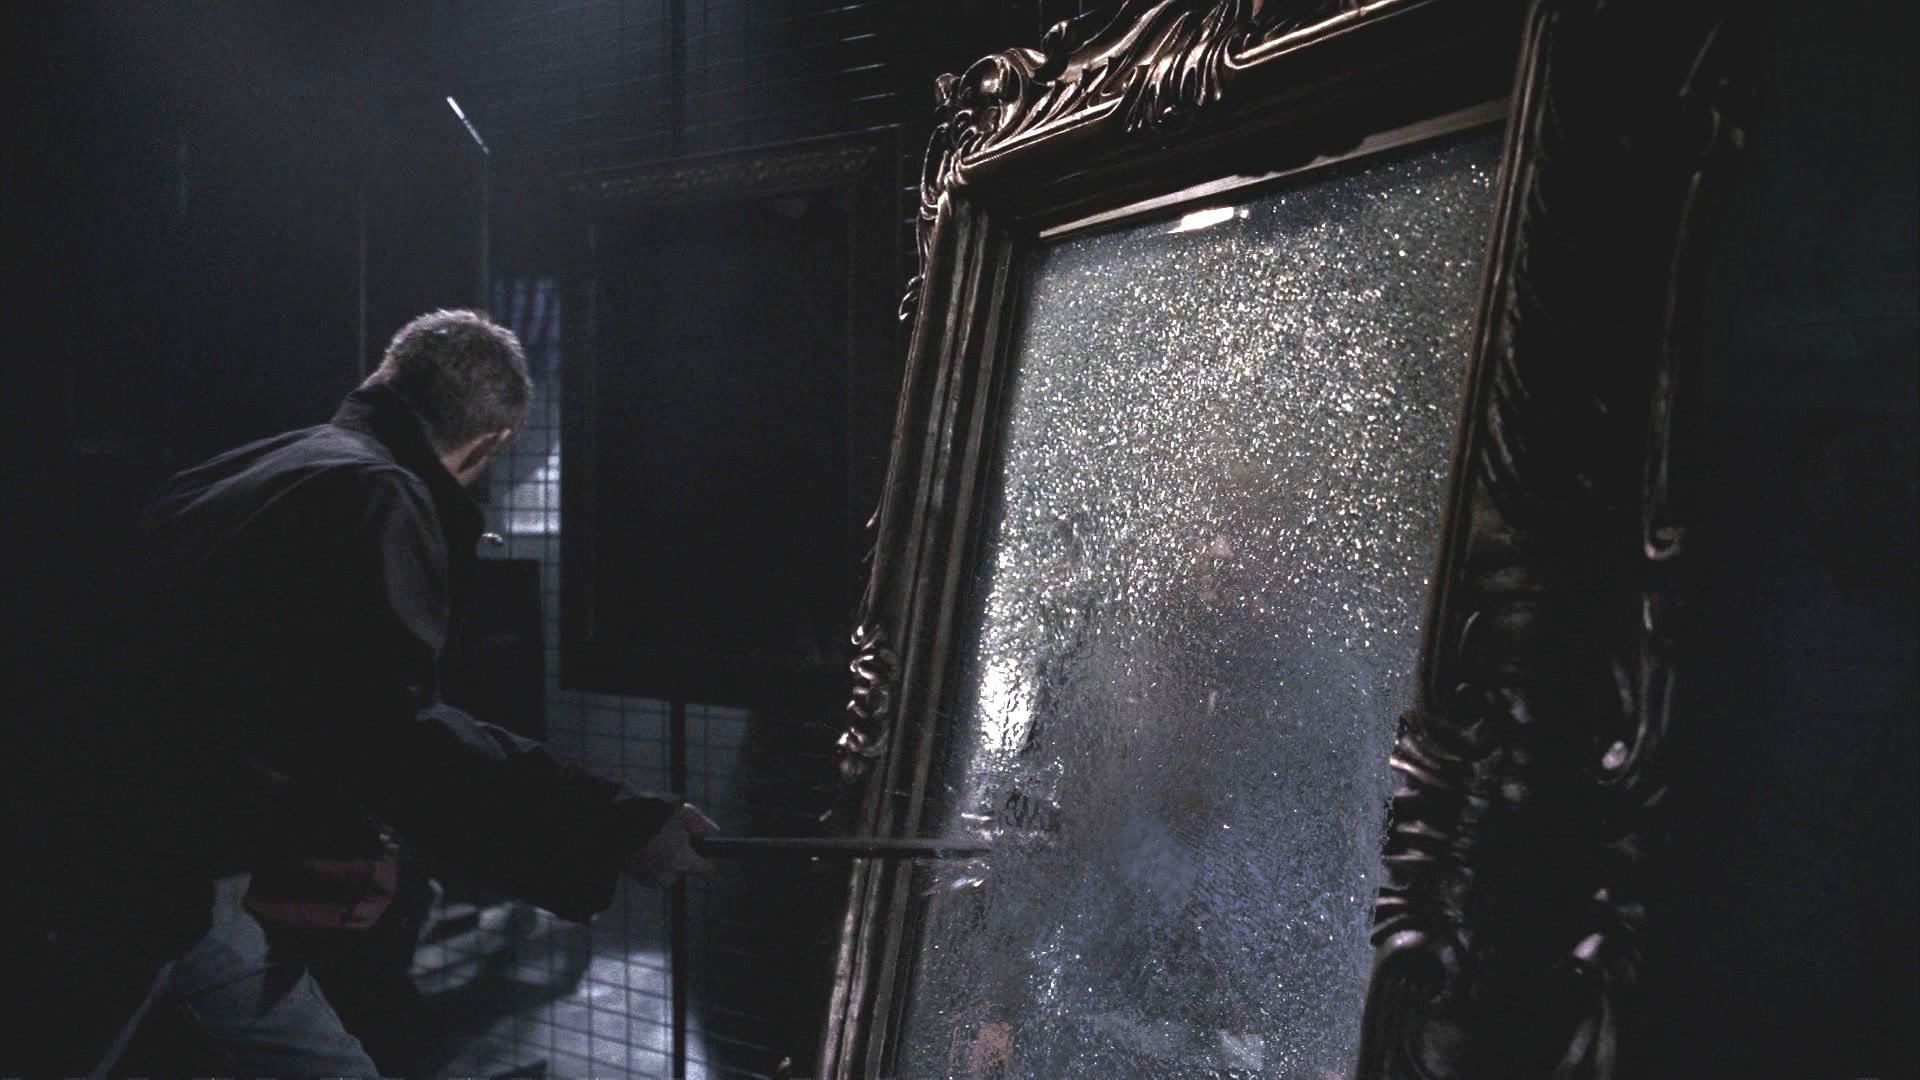 Jensen Ackles as Dean smashing mirror Supernatural confirmed fan theories